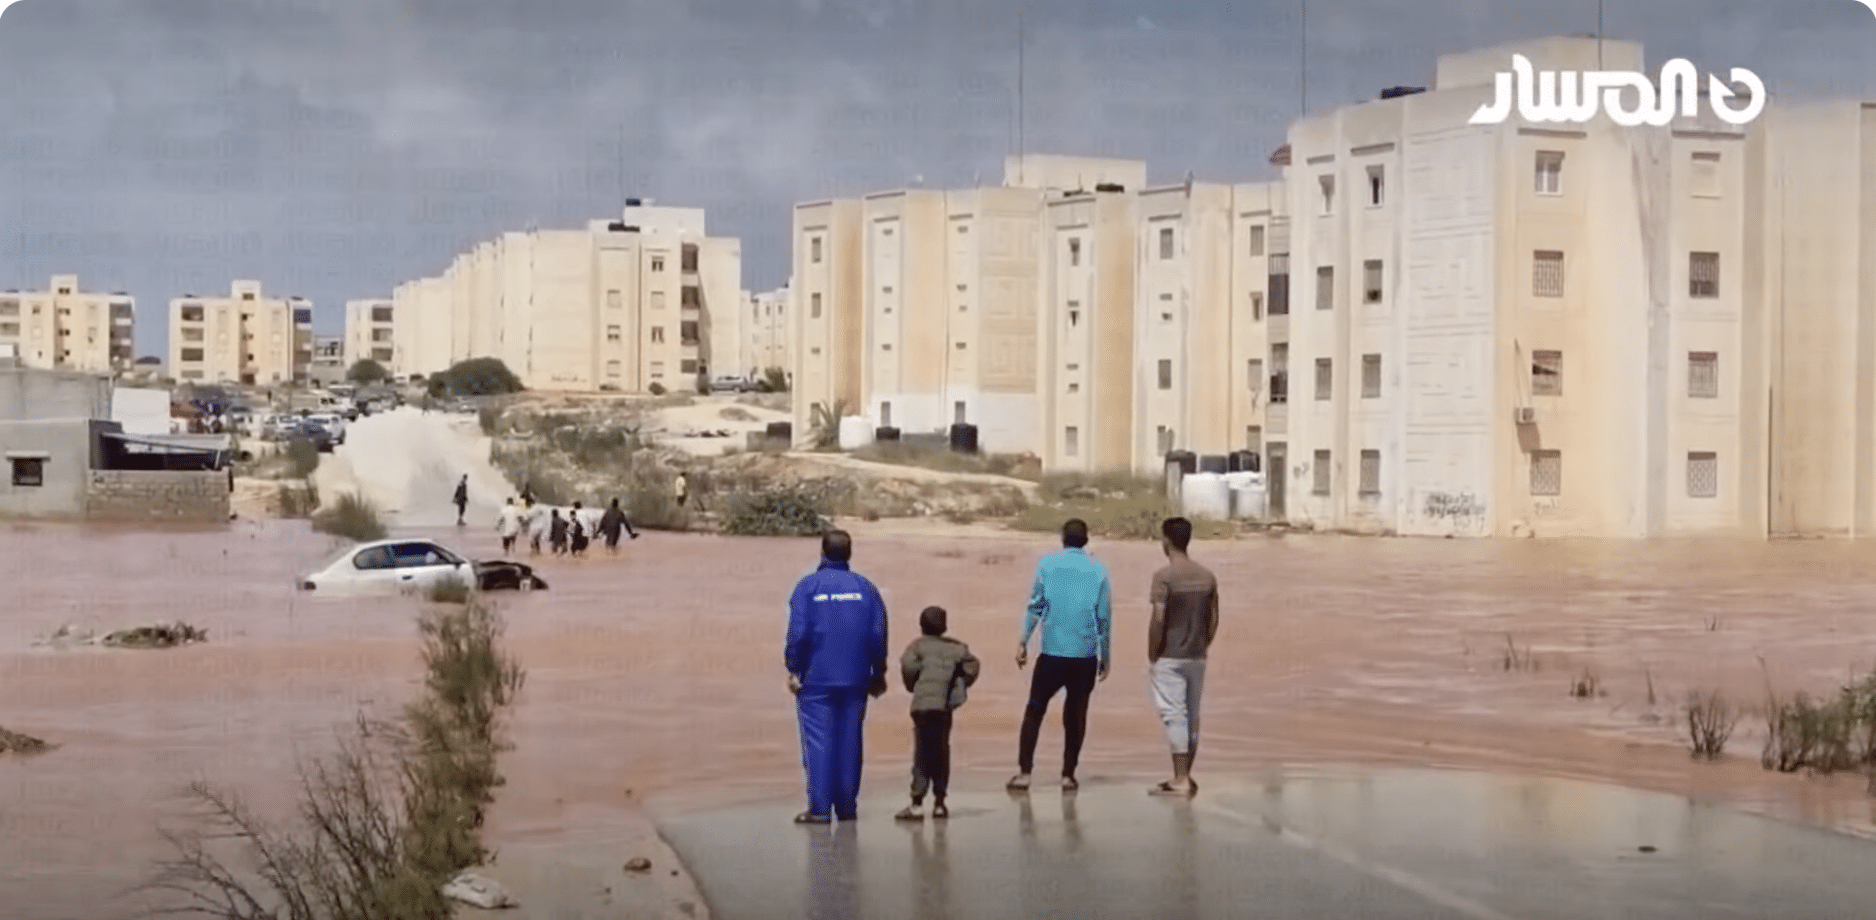 UPDATE: Over 10,000 people are still missing after deadly floods strike eastern Libya